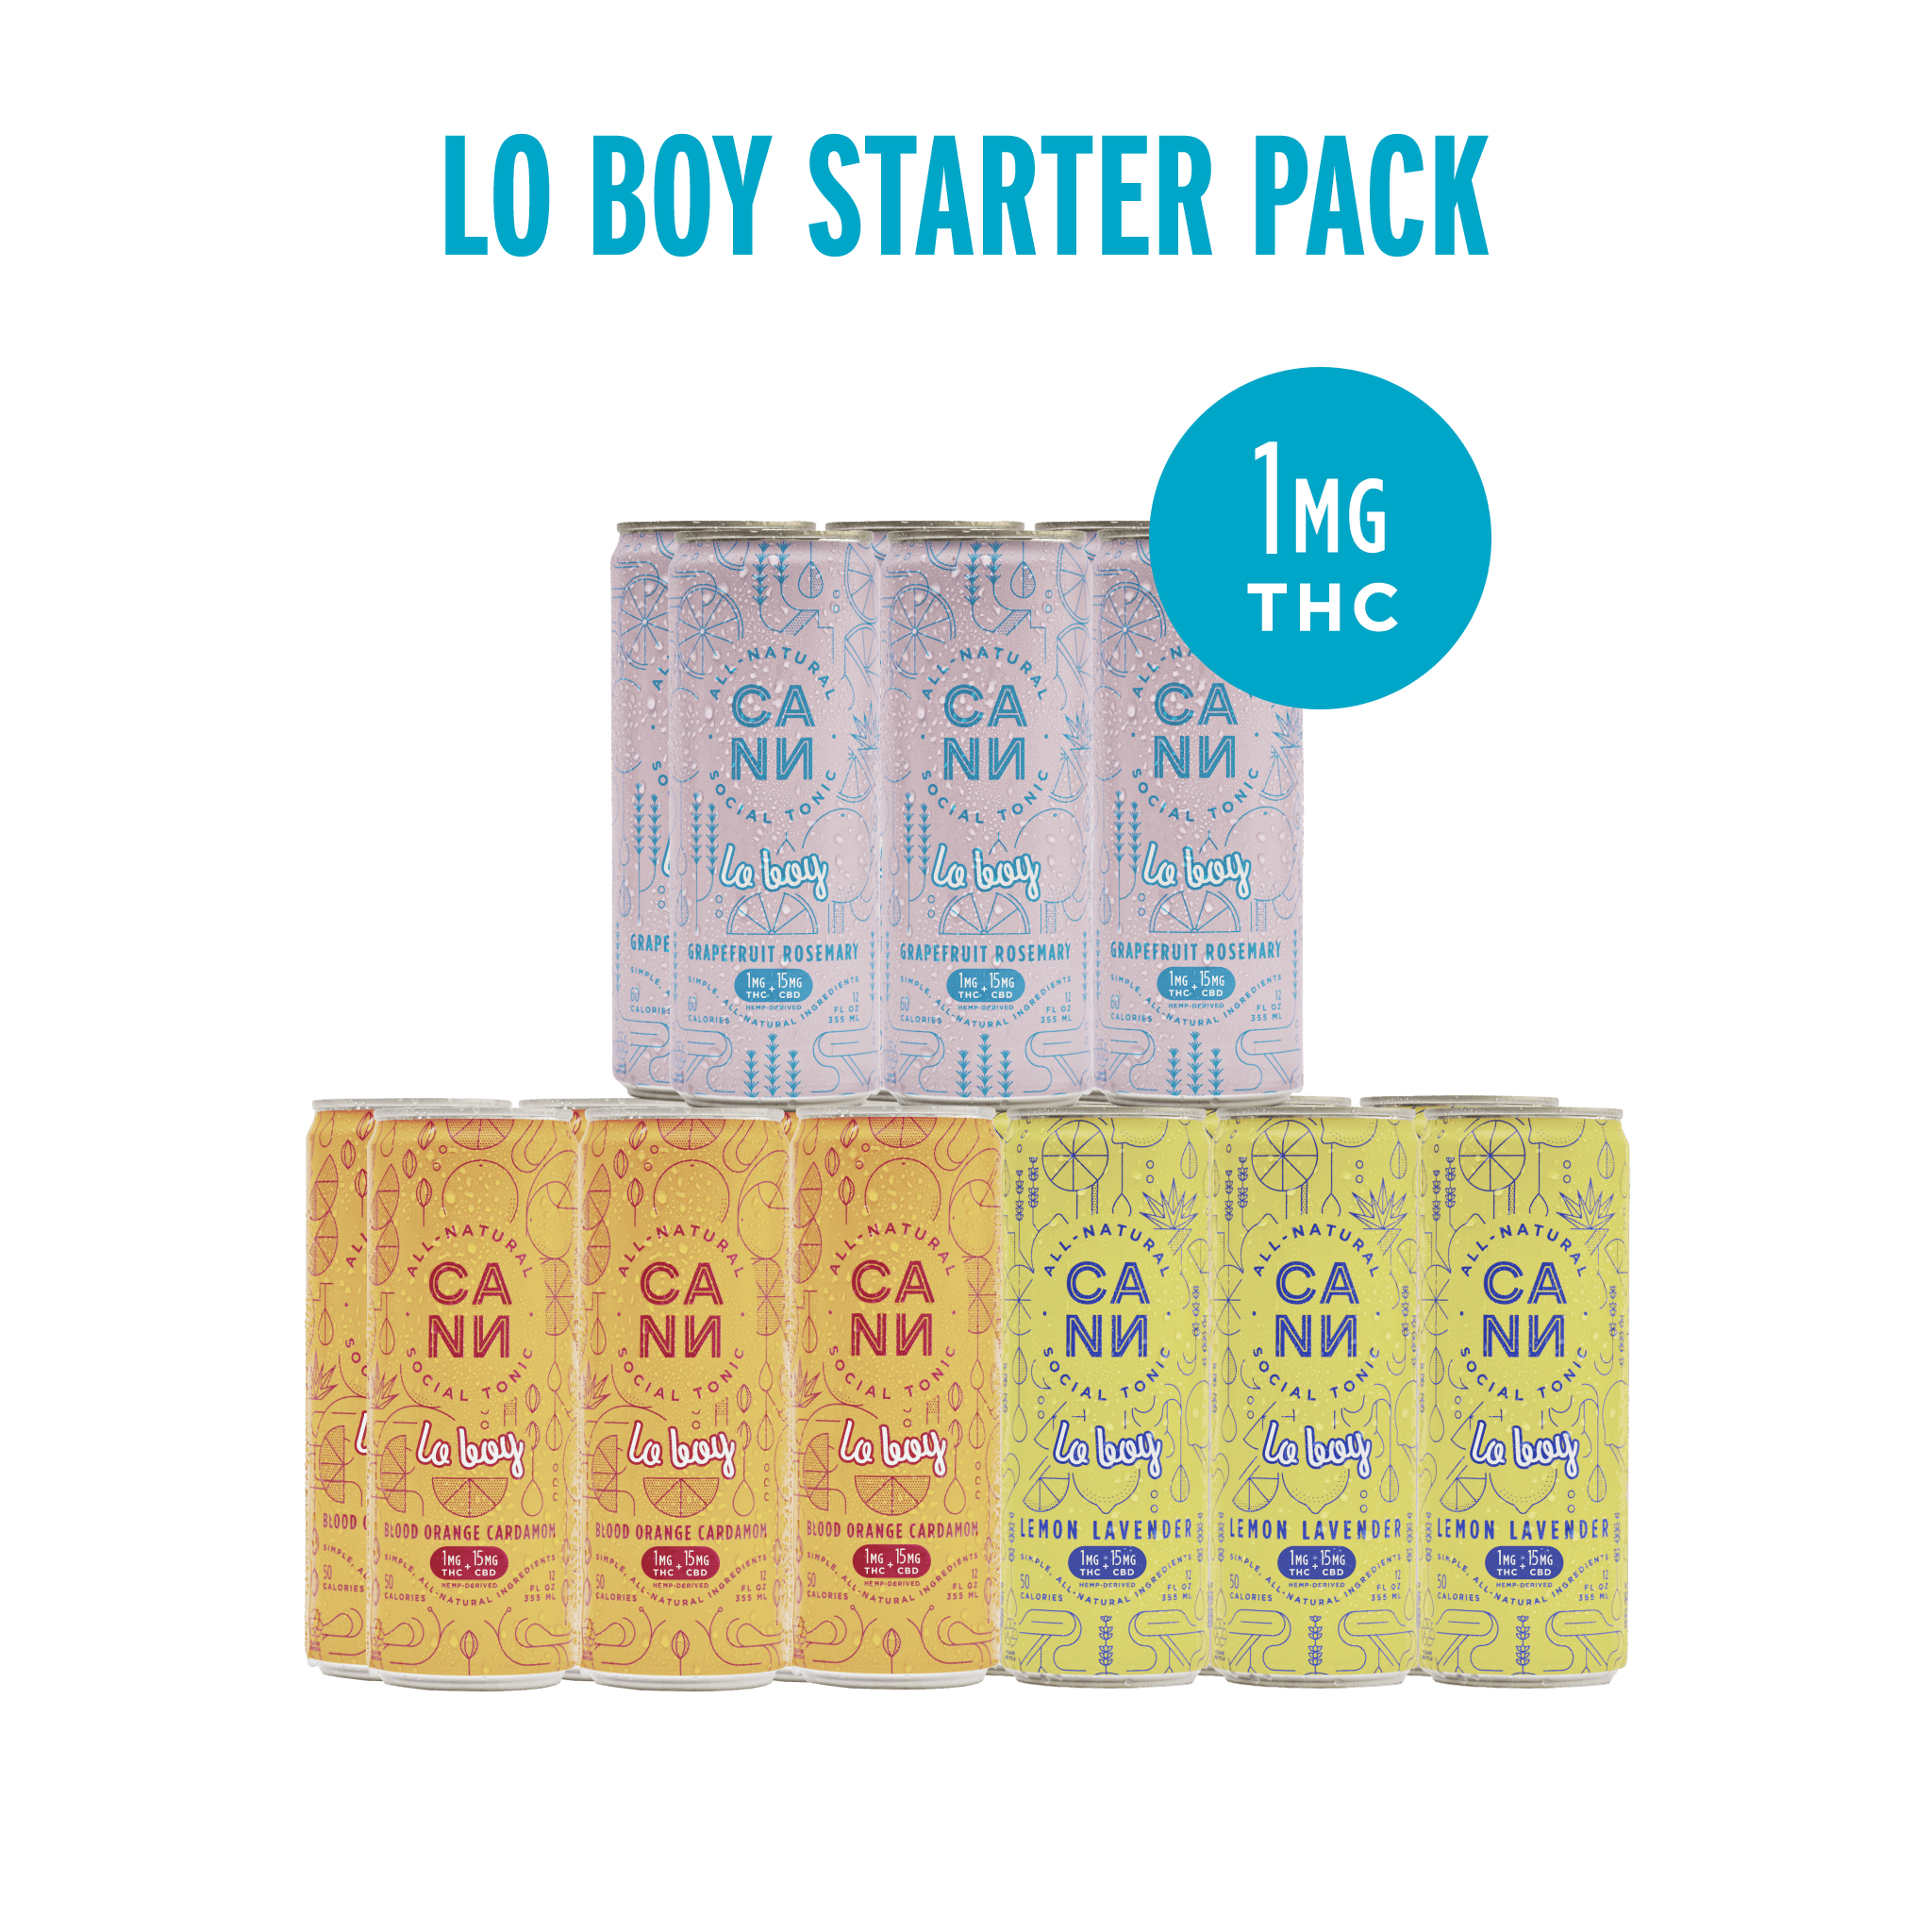 Lo Boy Starter Pack